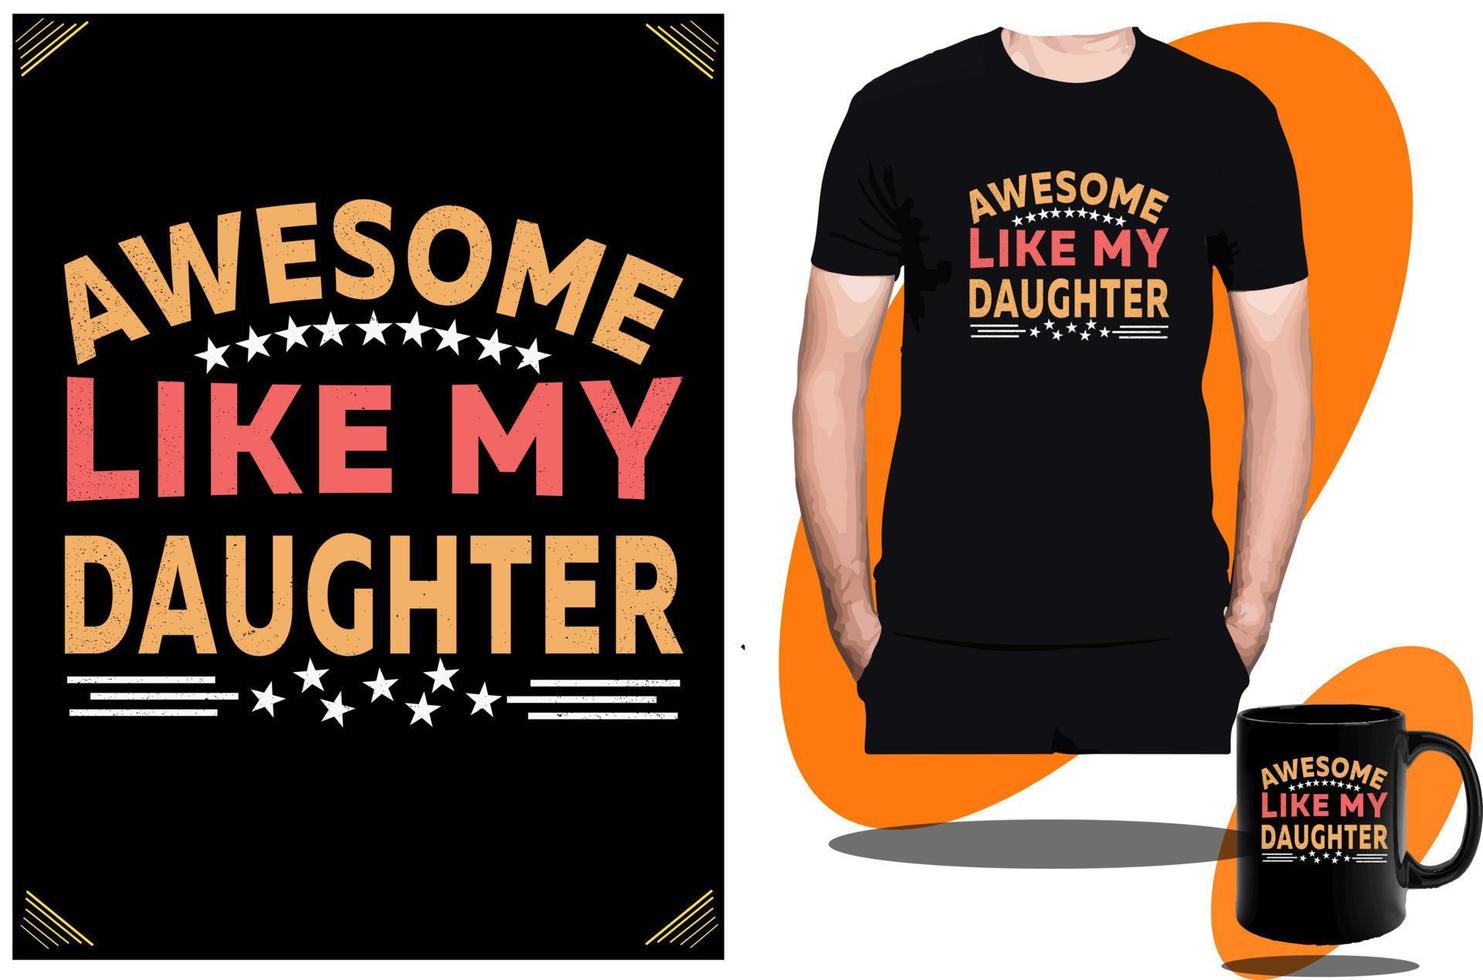 Väter Tag t Hemd Design oder Tochter und Sohn komisch t Hemd Design oder t Hemd Design Vorlage vektor